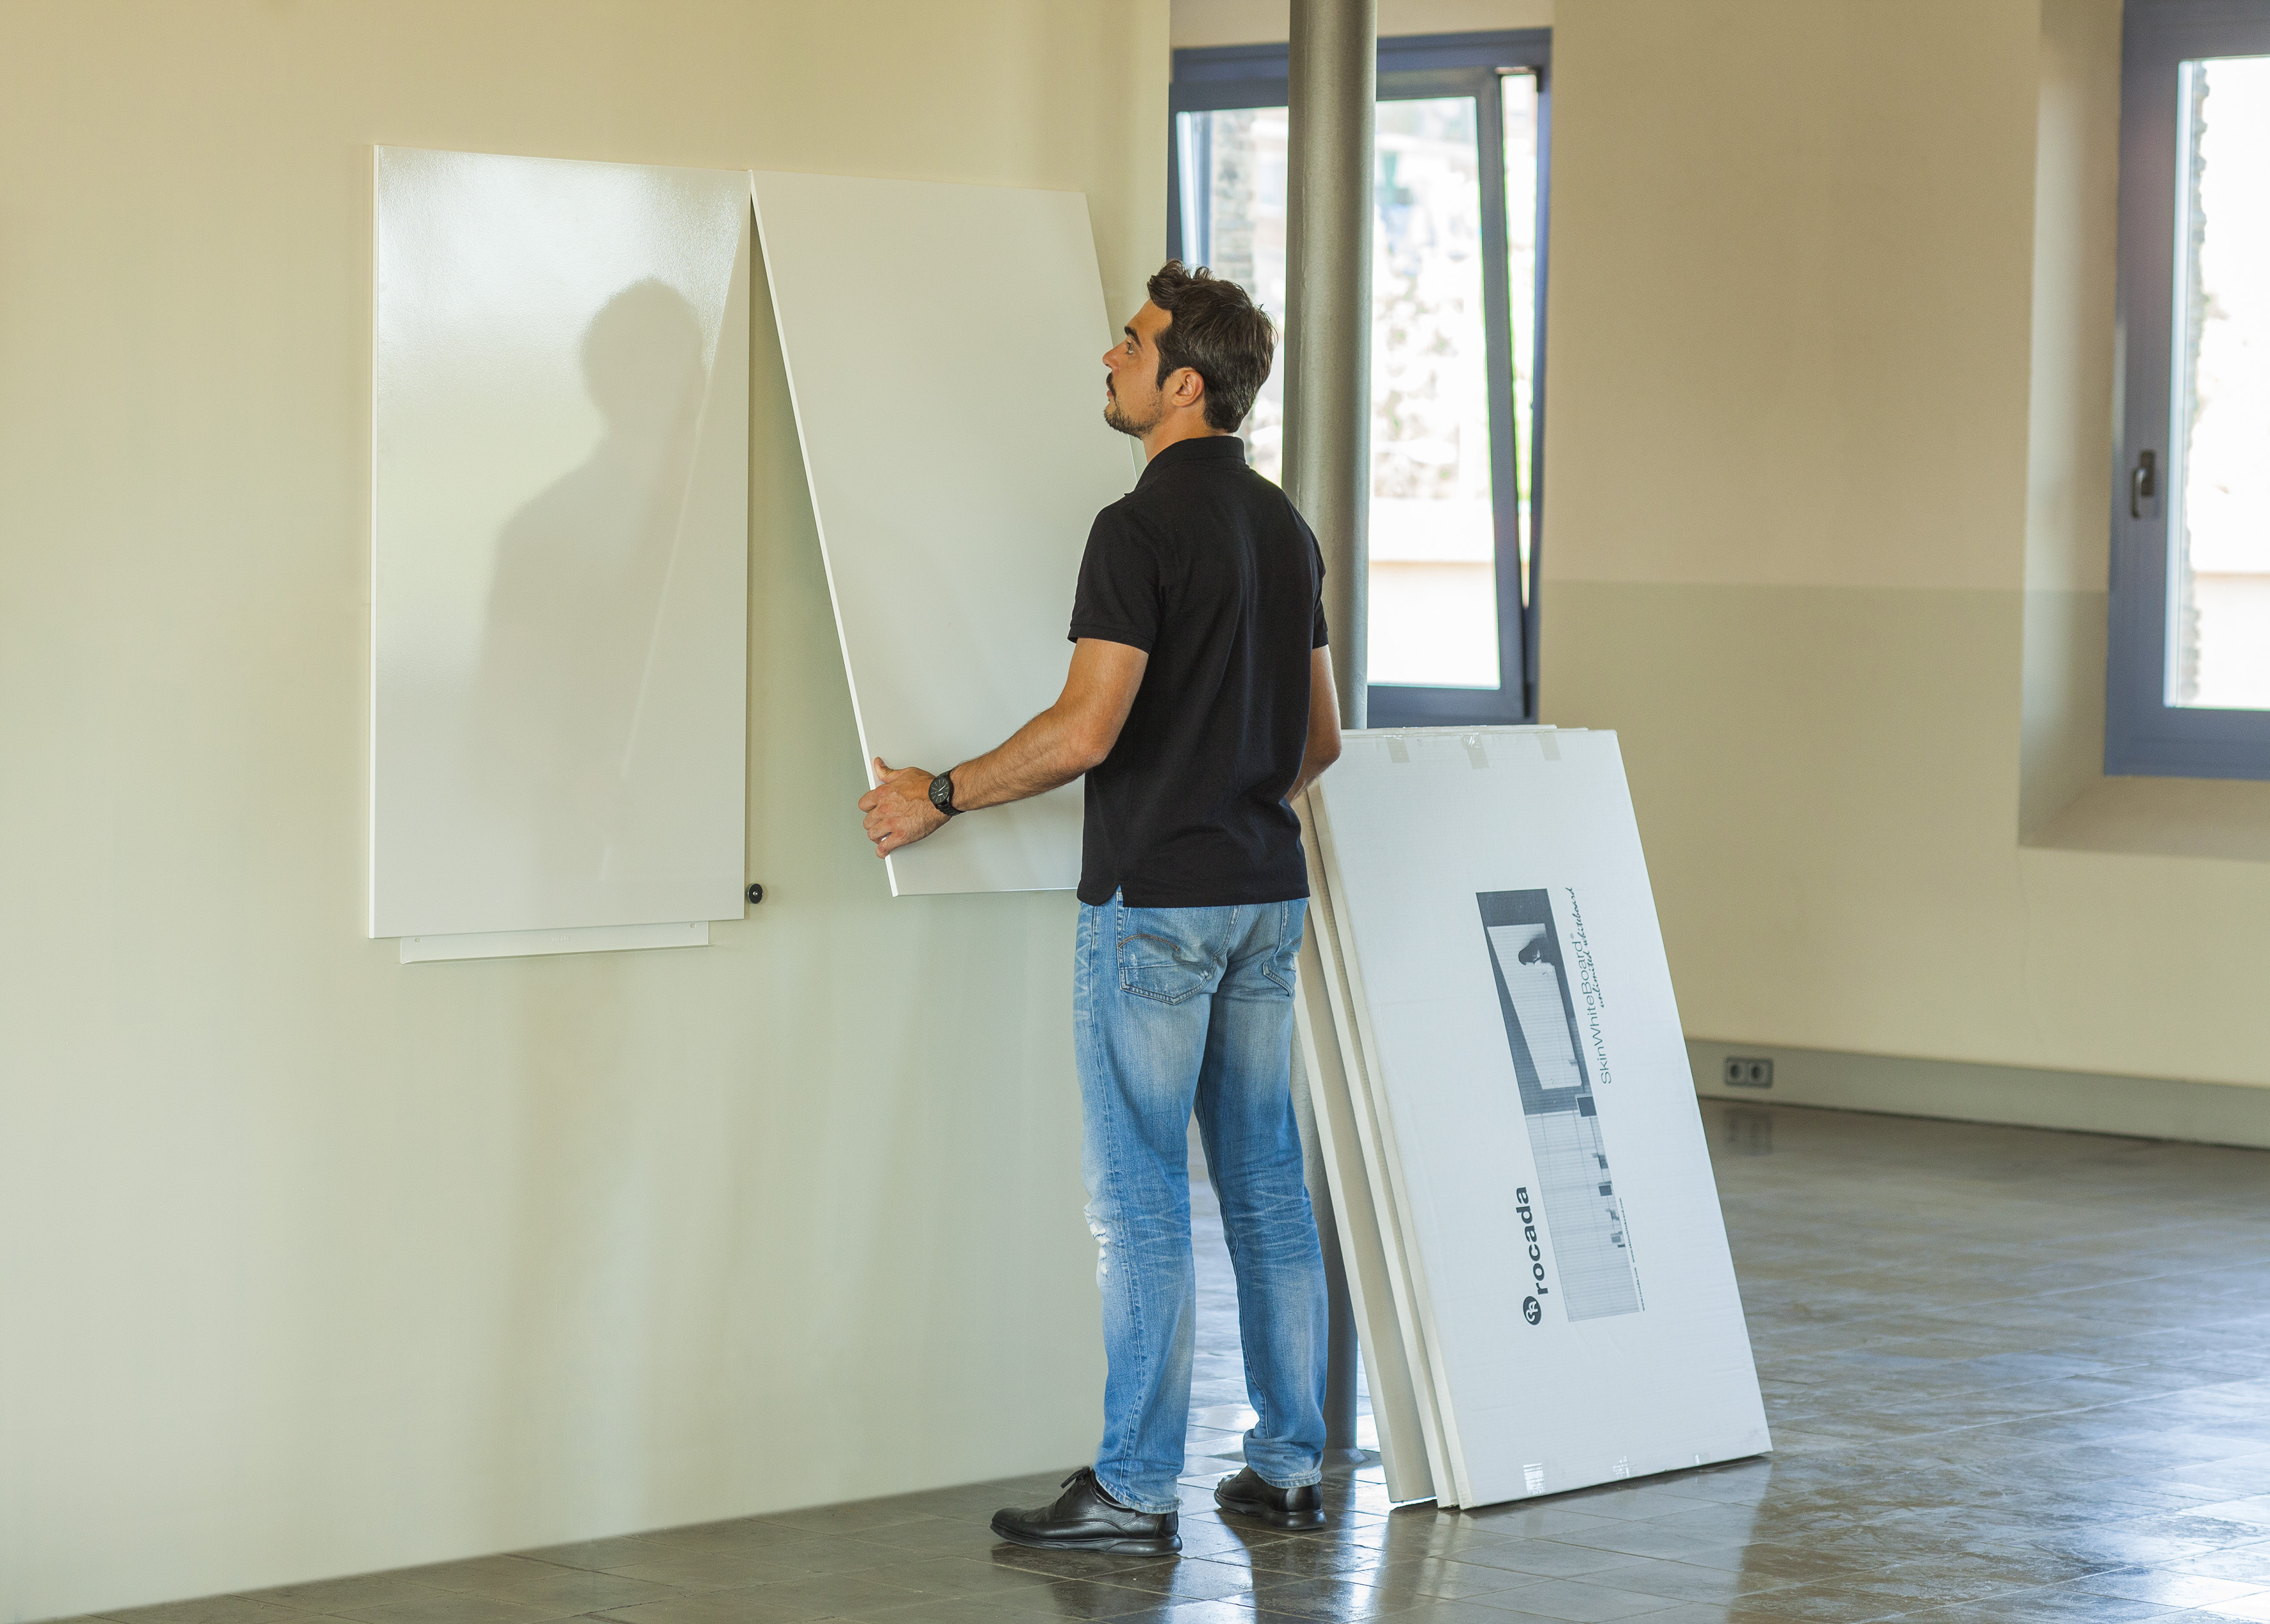 SKIN Magnetic whiteboard panel